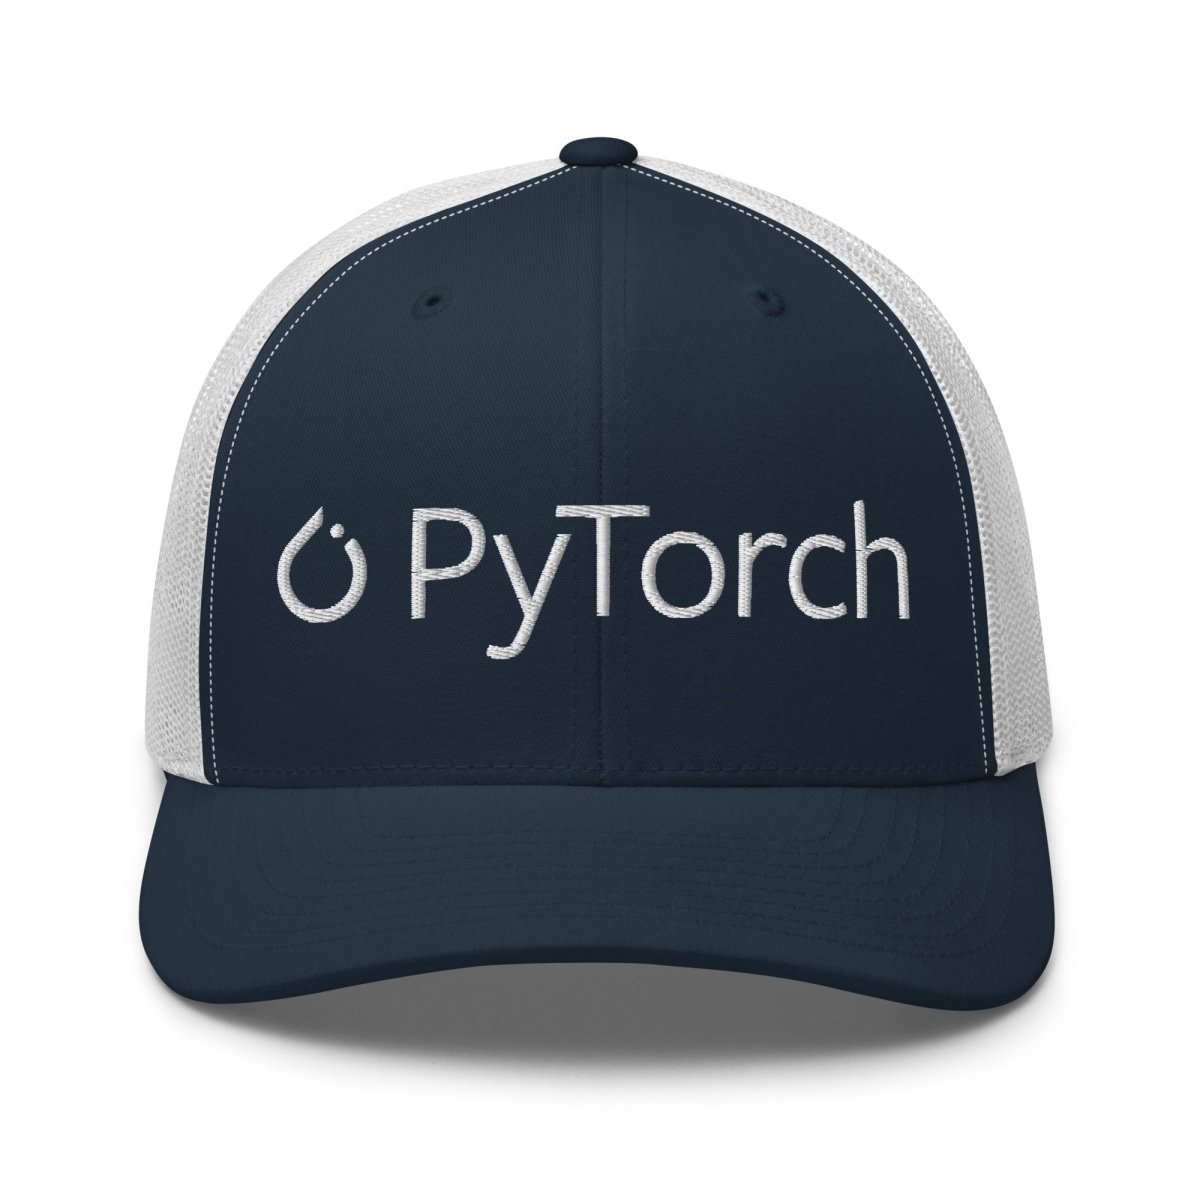 PyTorch White Logo Embroidered Trucker Cap - AI Store